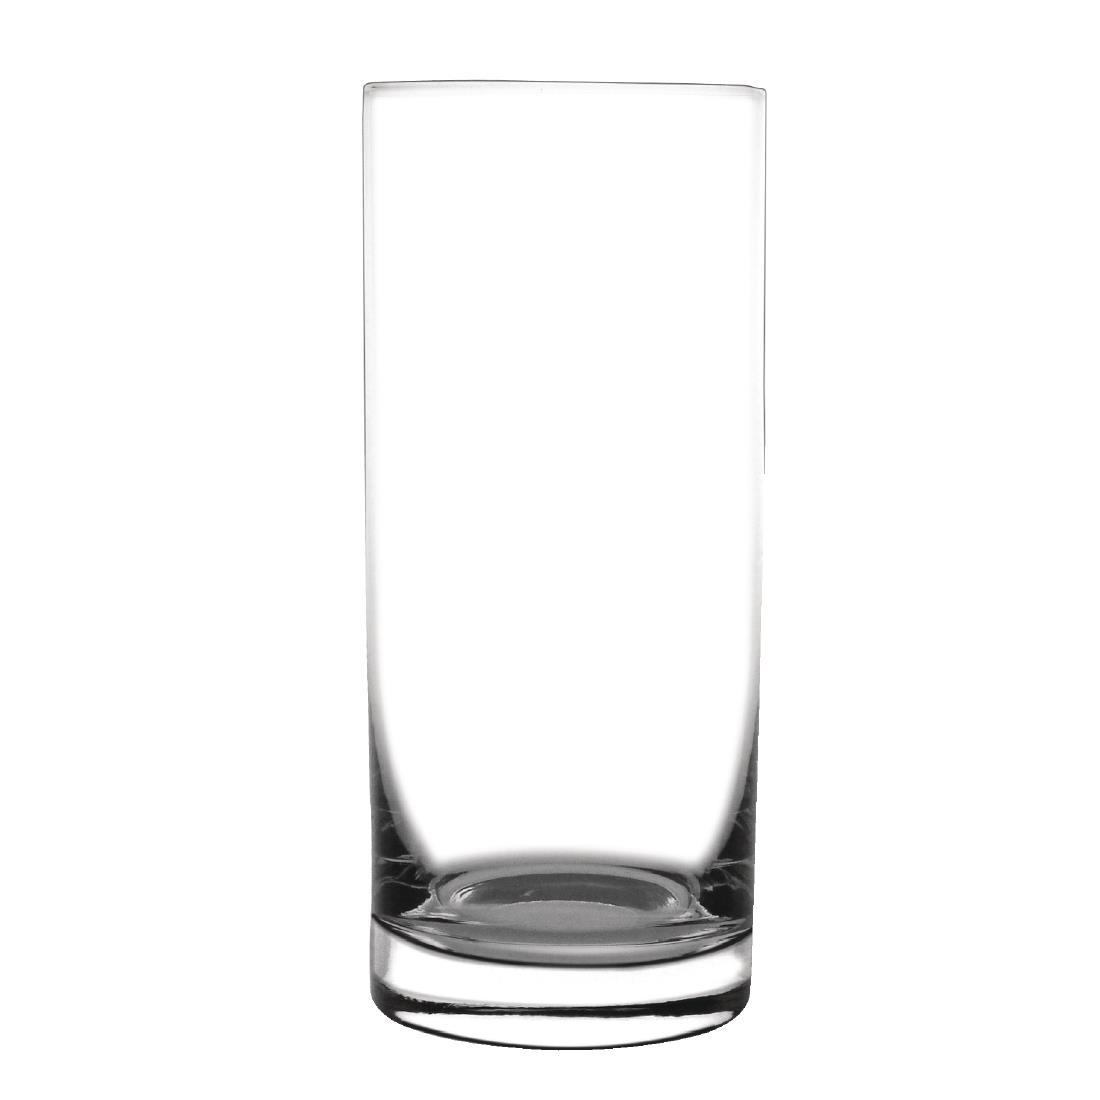 Olympia Crystal Hi Ball Glasses 285ml (Pack of 6) - GF740  - 1